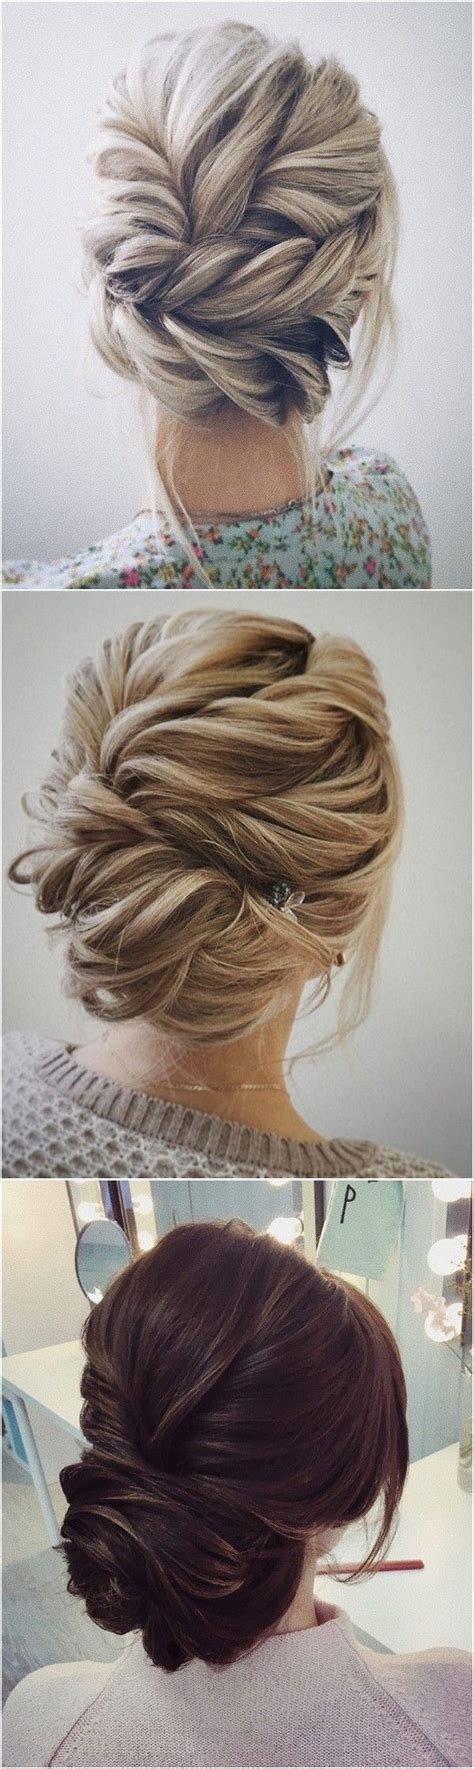 Top 15 Wedding Hairstyles For 2022 Trends Emma Loves Weddings Hair